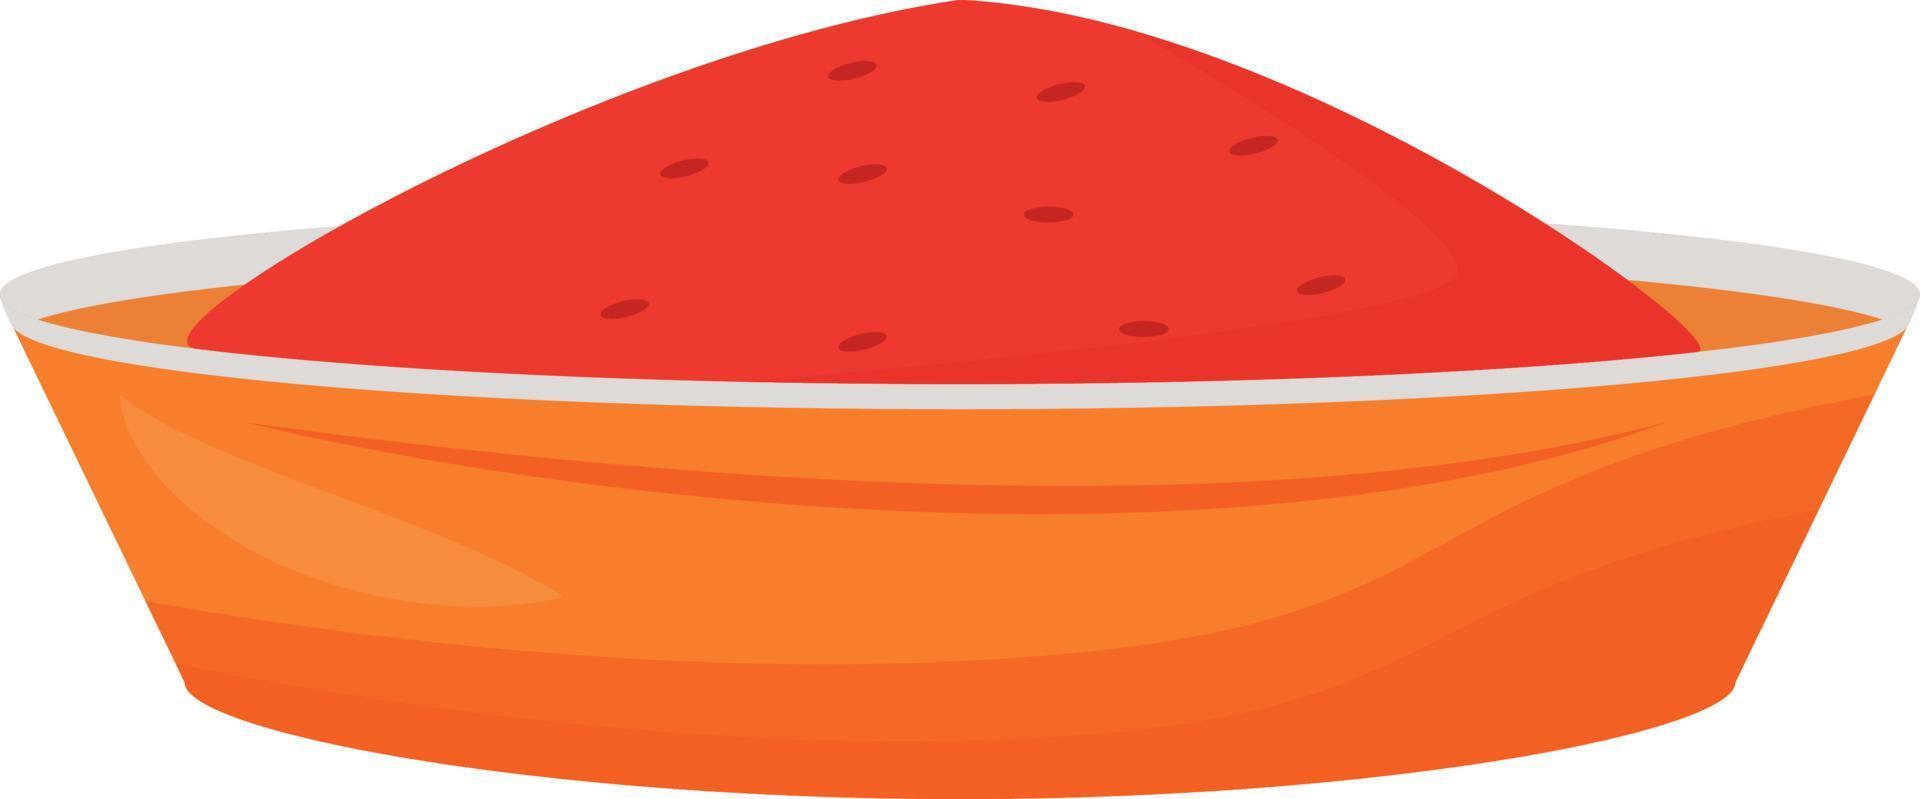 Red food in orange bowl semi flat color vector element